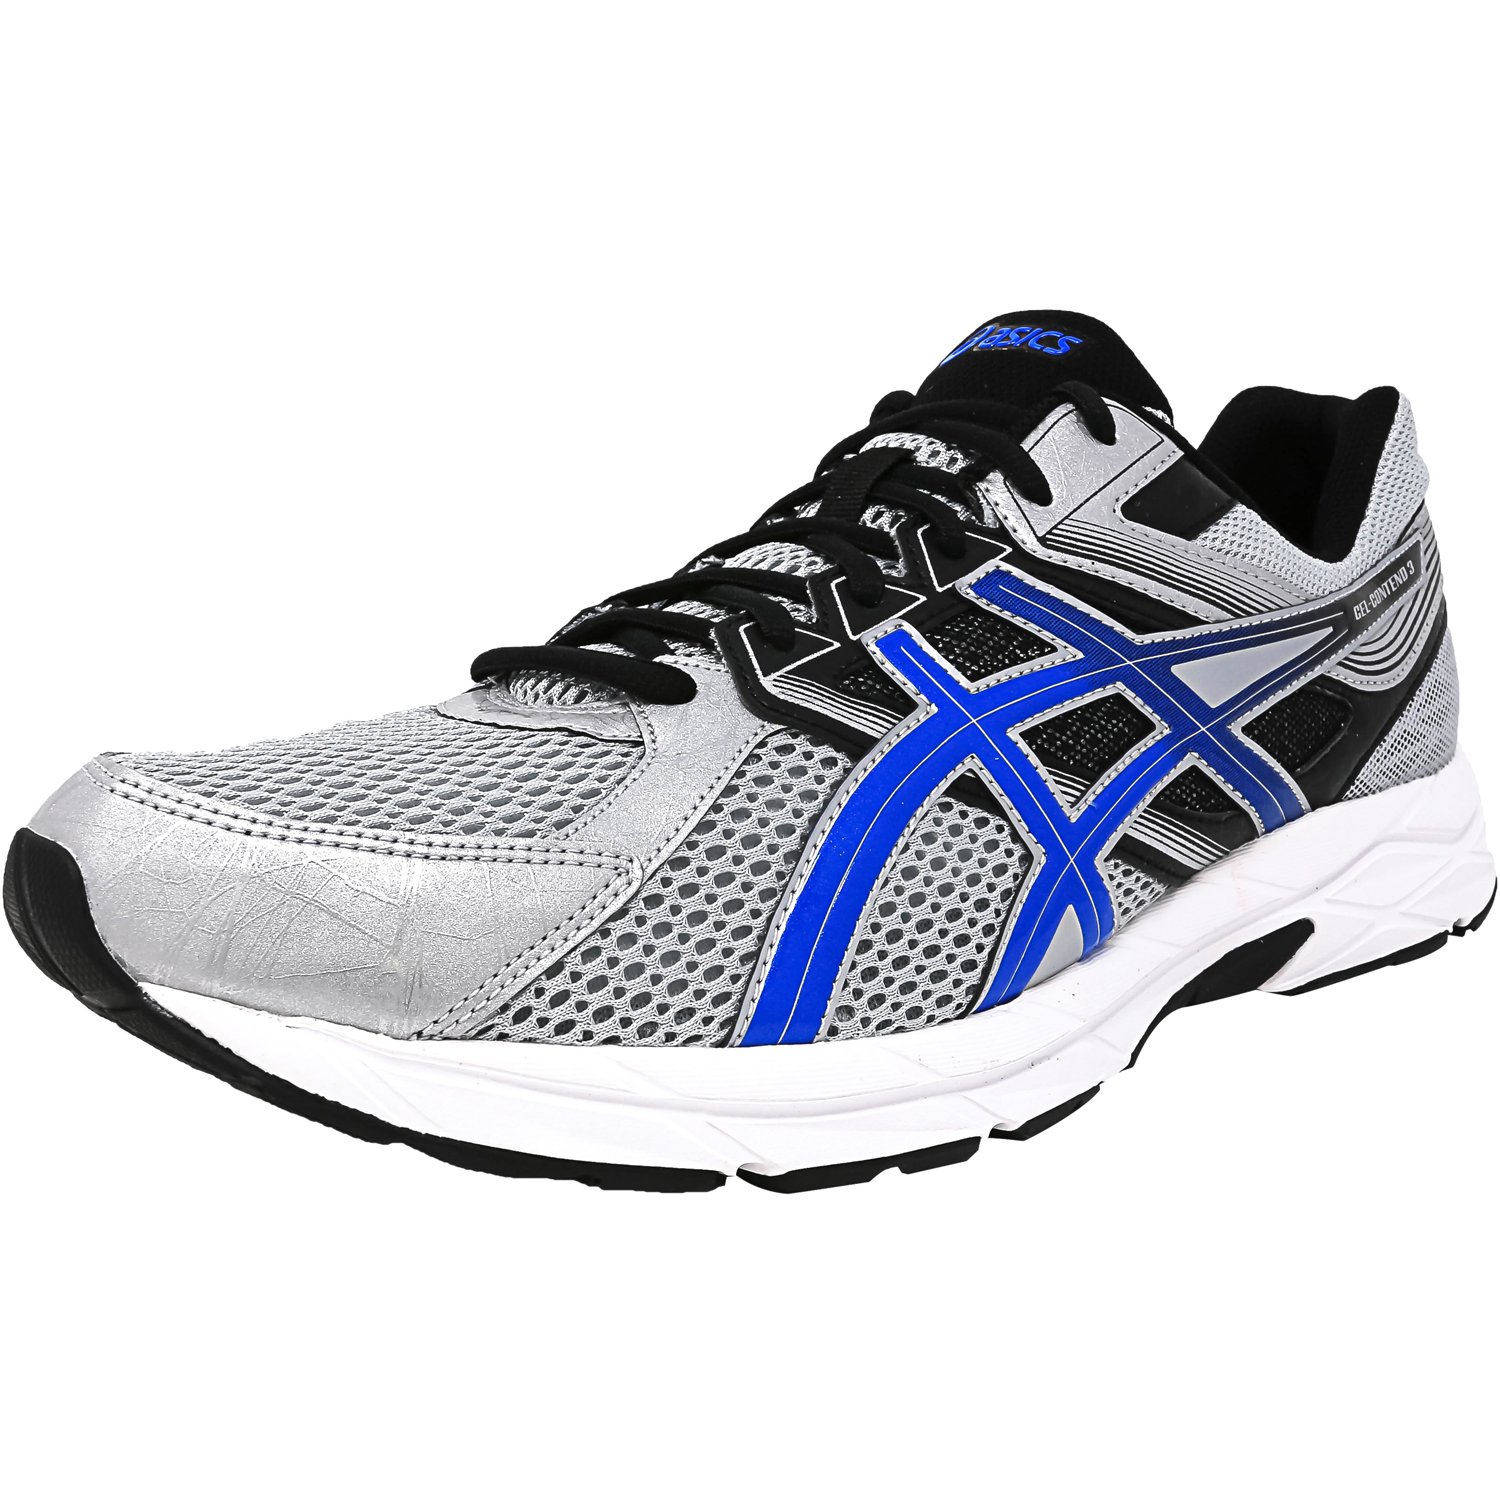 Asics Men's 3 Silver / Electric Blue Black Ankle-High Running Shoe - 7.5M - Walmart.com